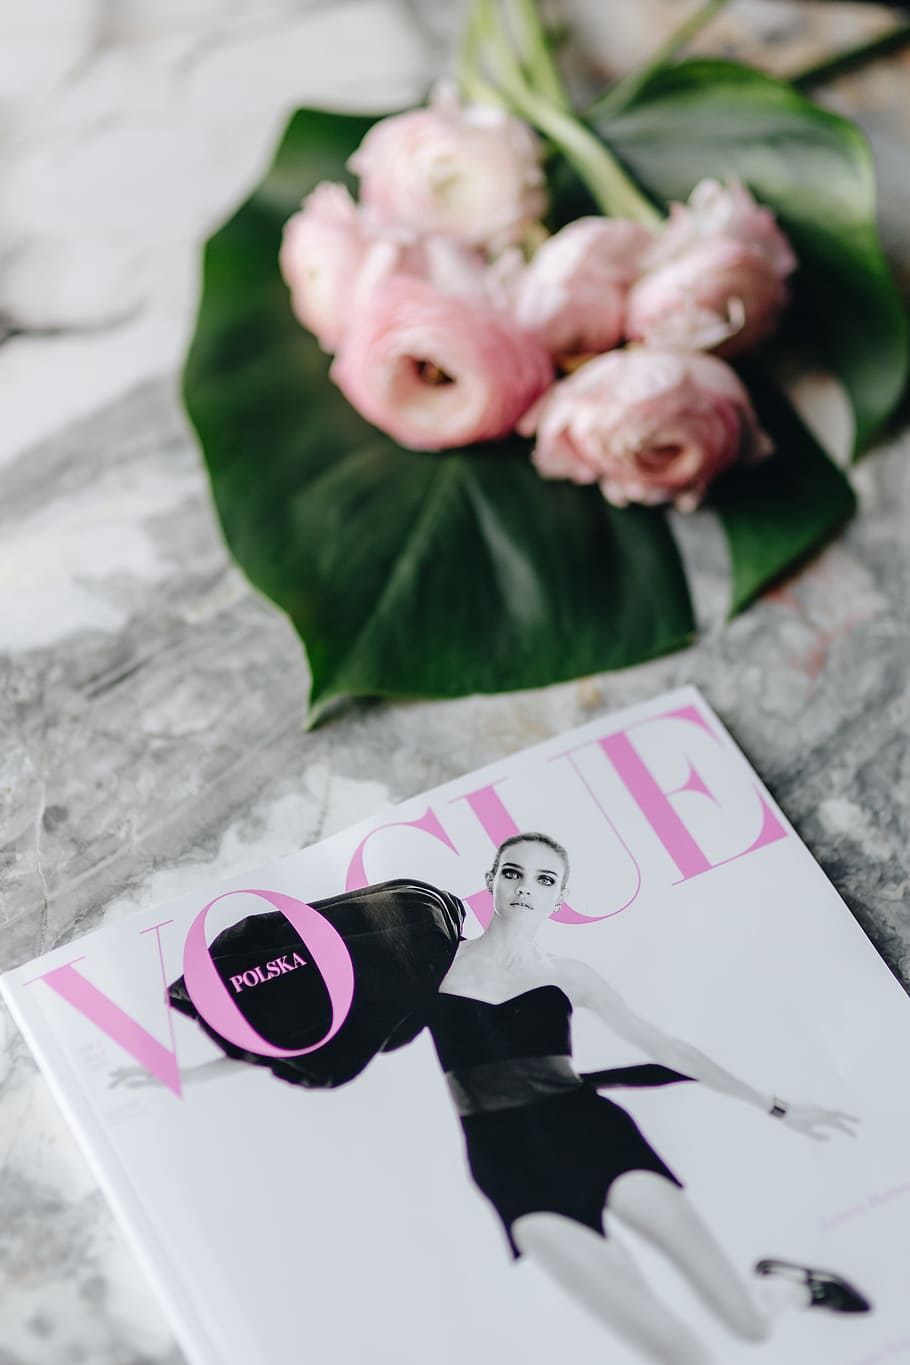 vogue poland 2 2018, &, lovely, buttercup flowers, flora, cute, magazine, floral, fashion, pink